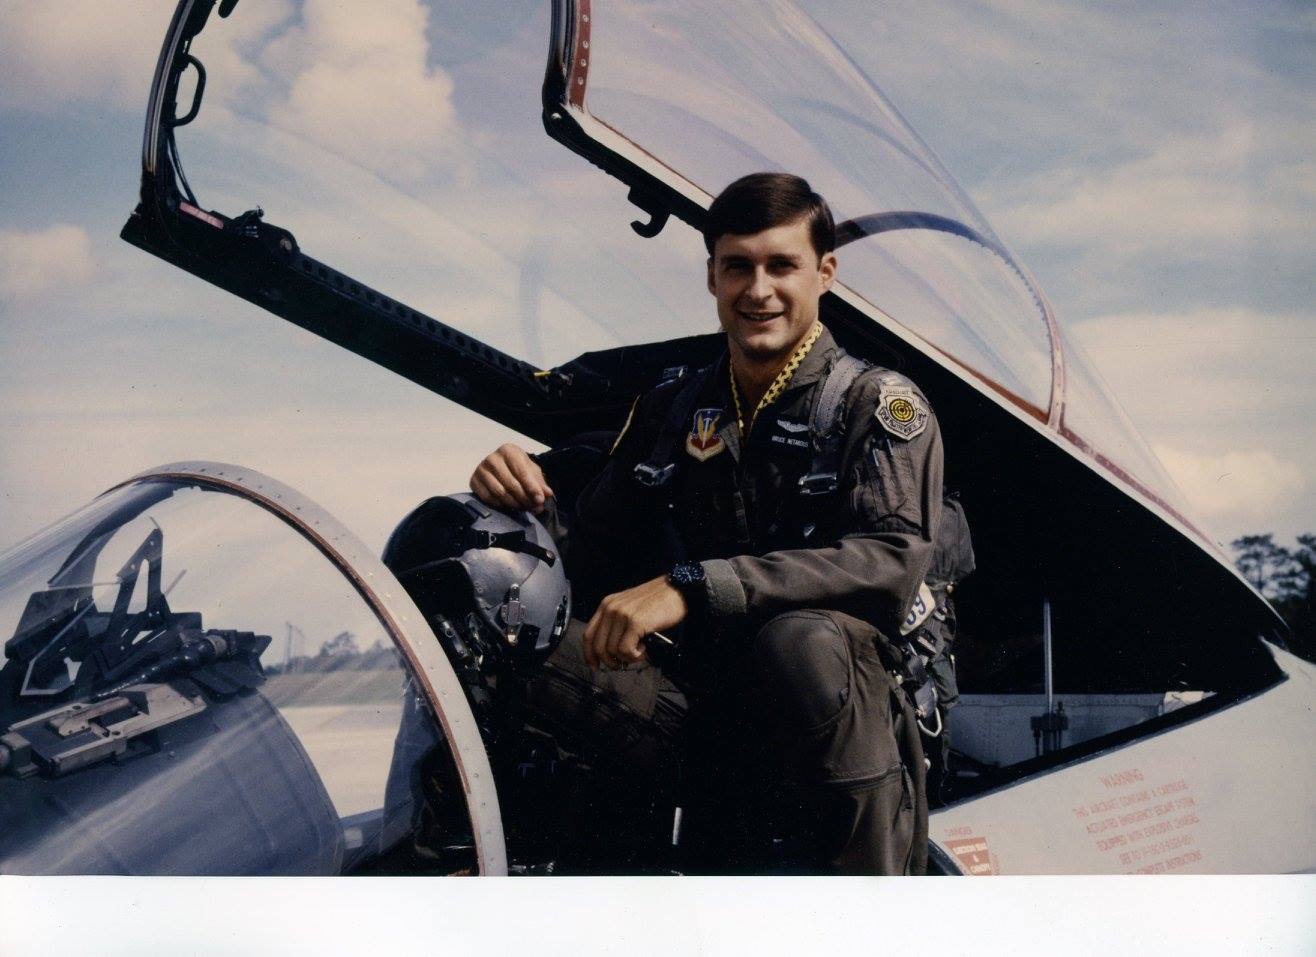 Bruce Netardus, Major, USAF